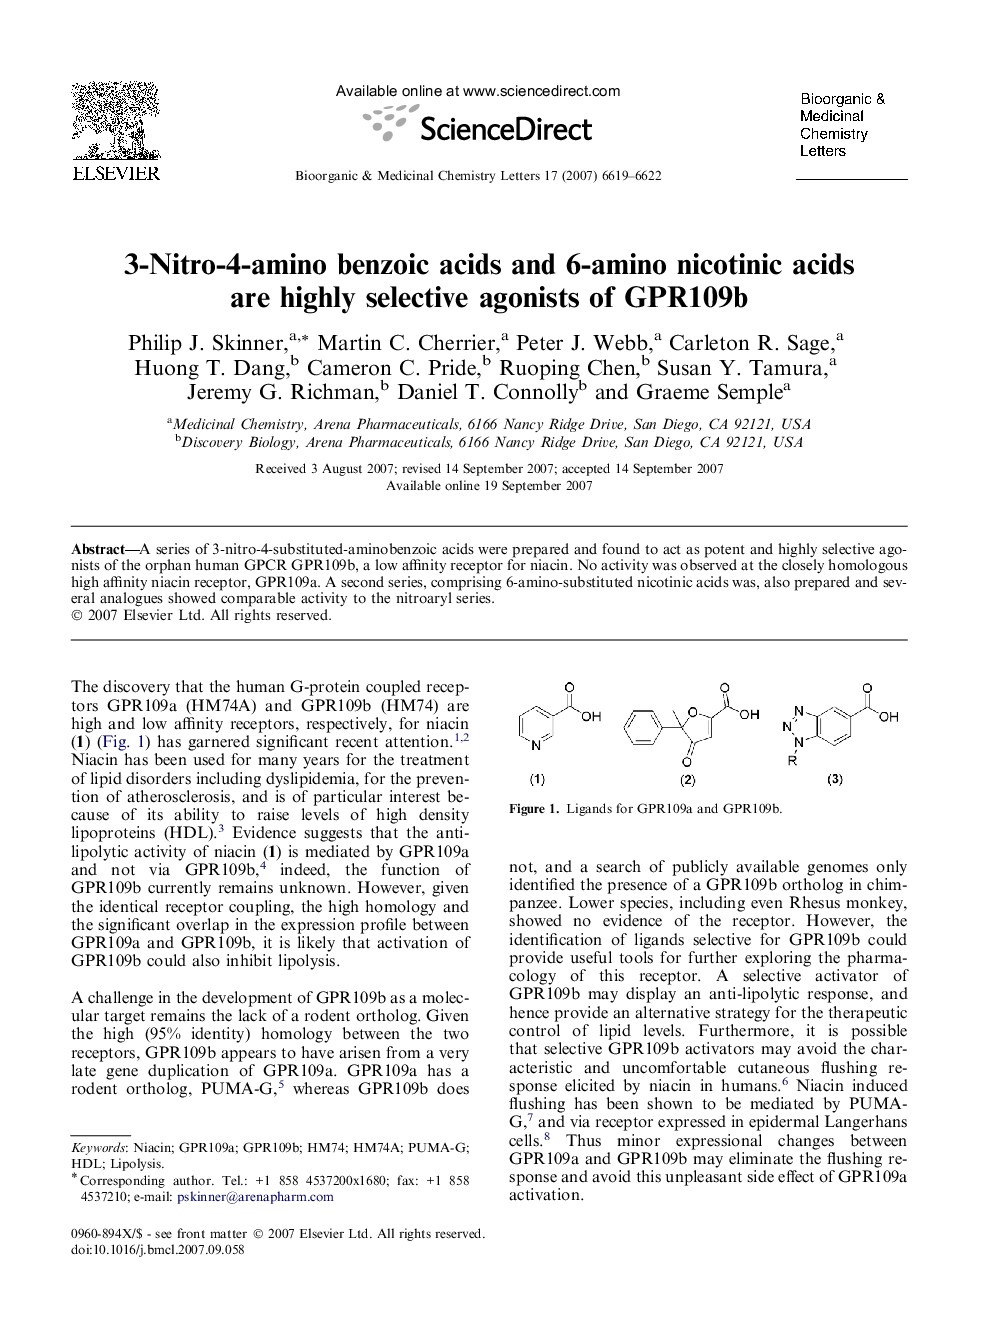 3-Nitro-4-amino benzoic acids and 6-amino nicotinic acids are highly selective agonists of GPR109b